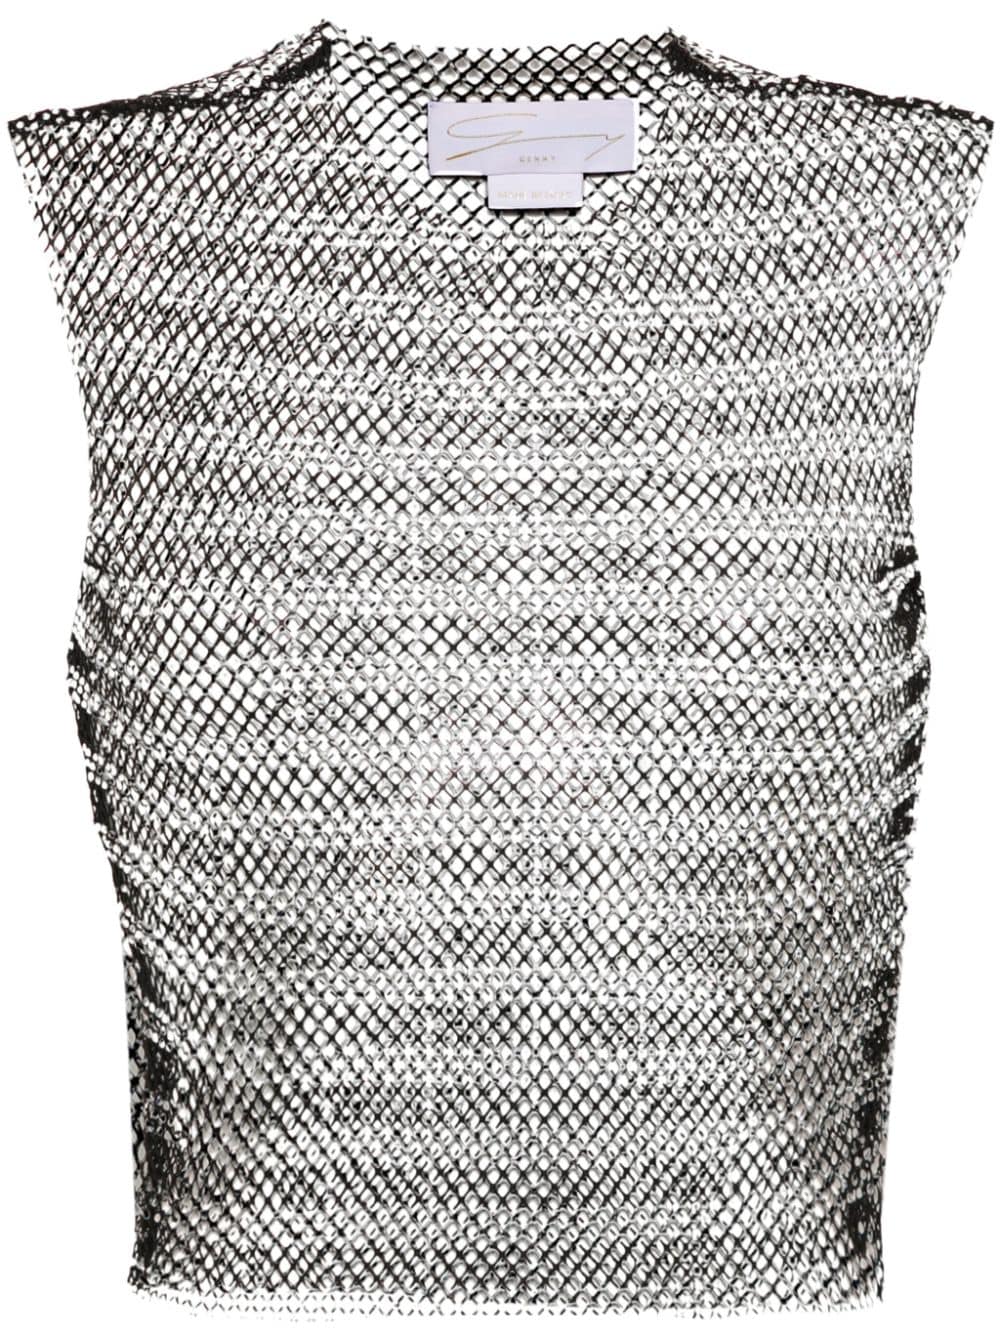 Rhinestone-embellished mesh top<BR/><BR/><BR/>